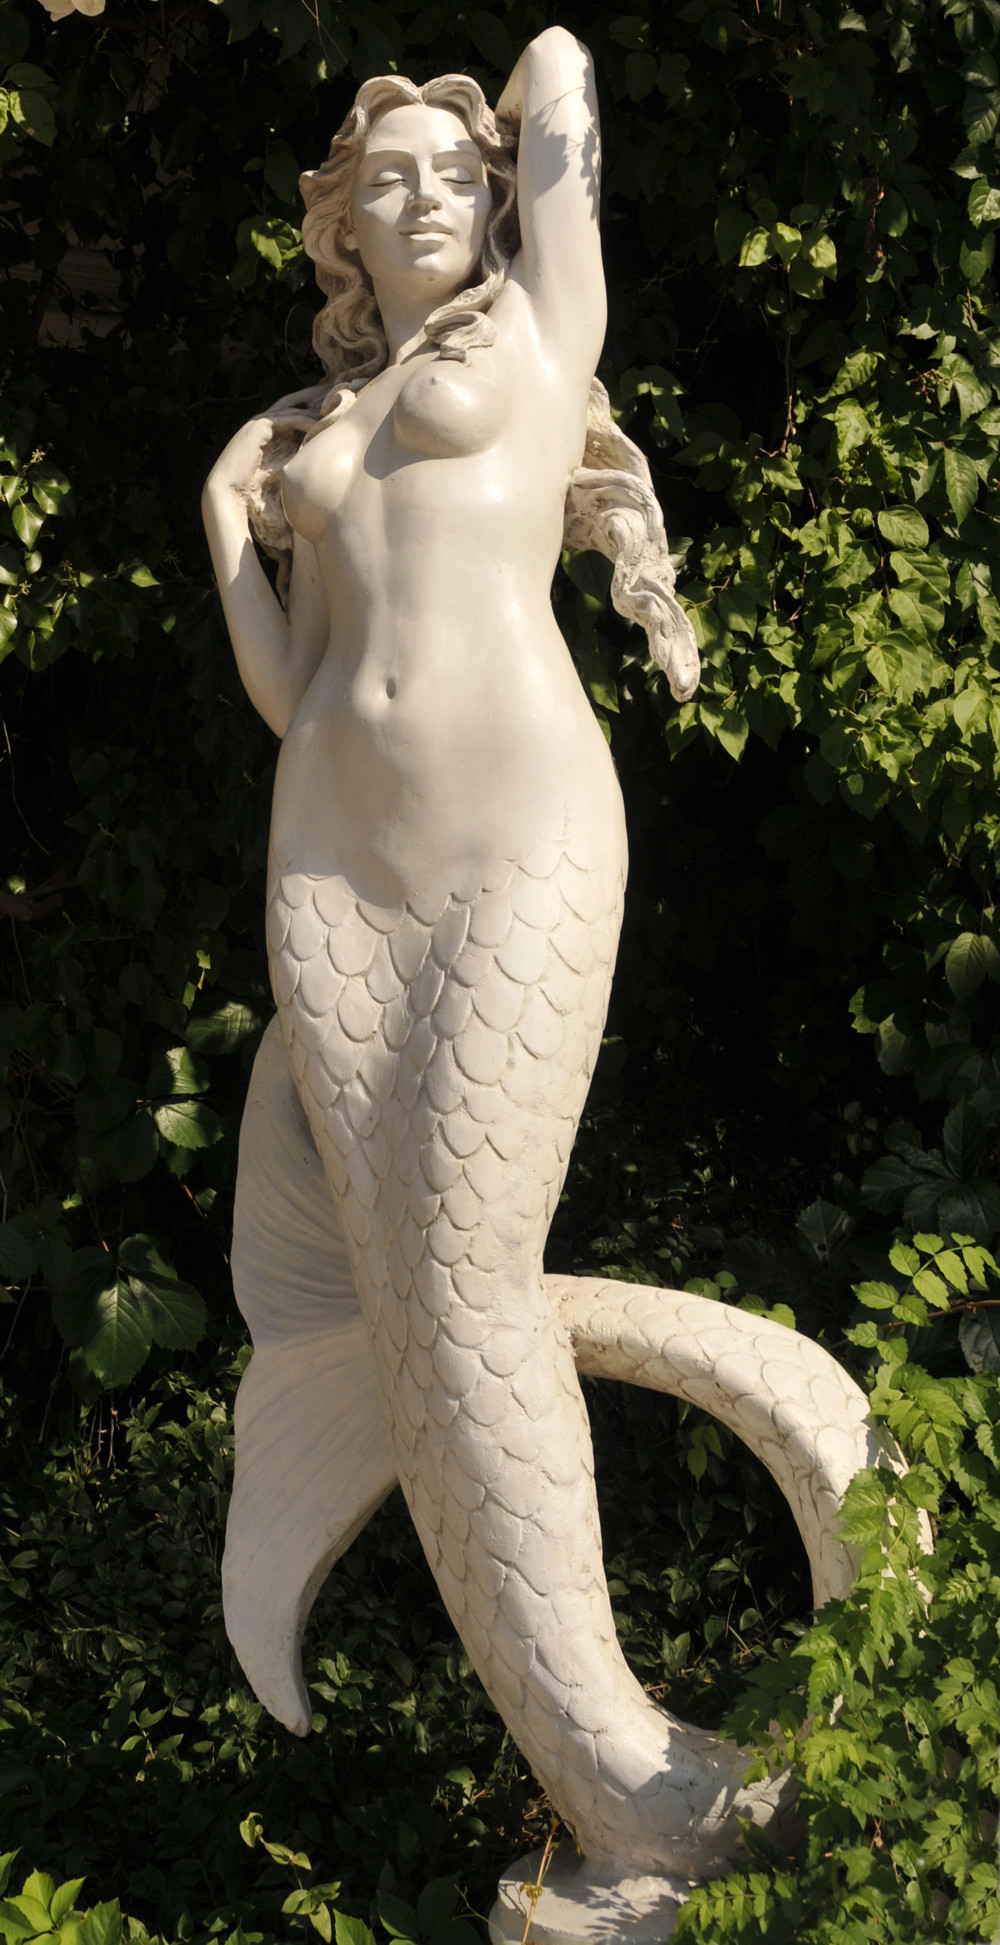 Mermaid statue at Club Hotel Letoonia in Fethiye Harbor, Turkey